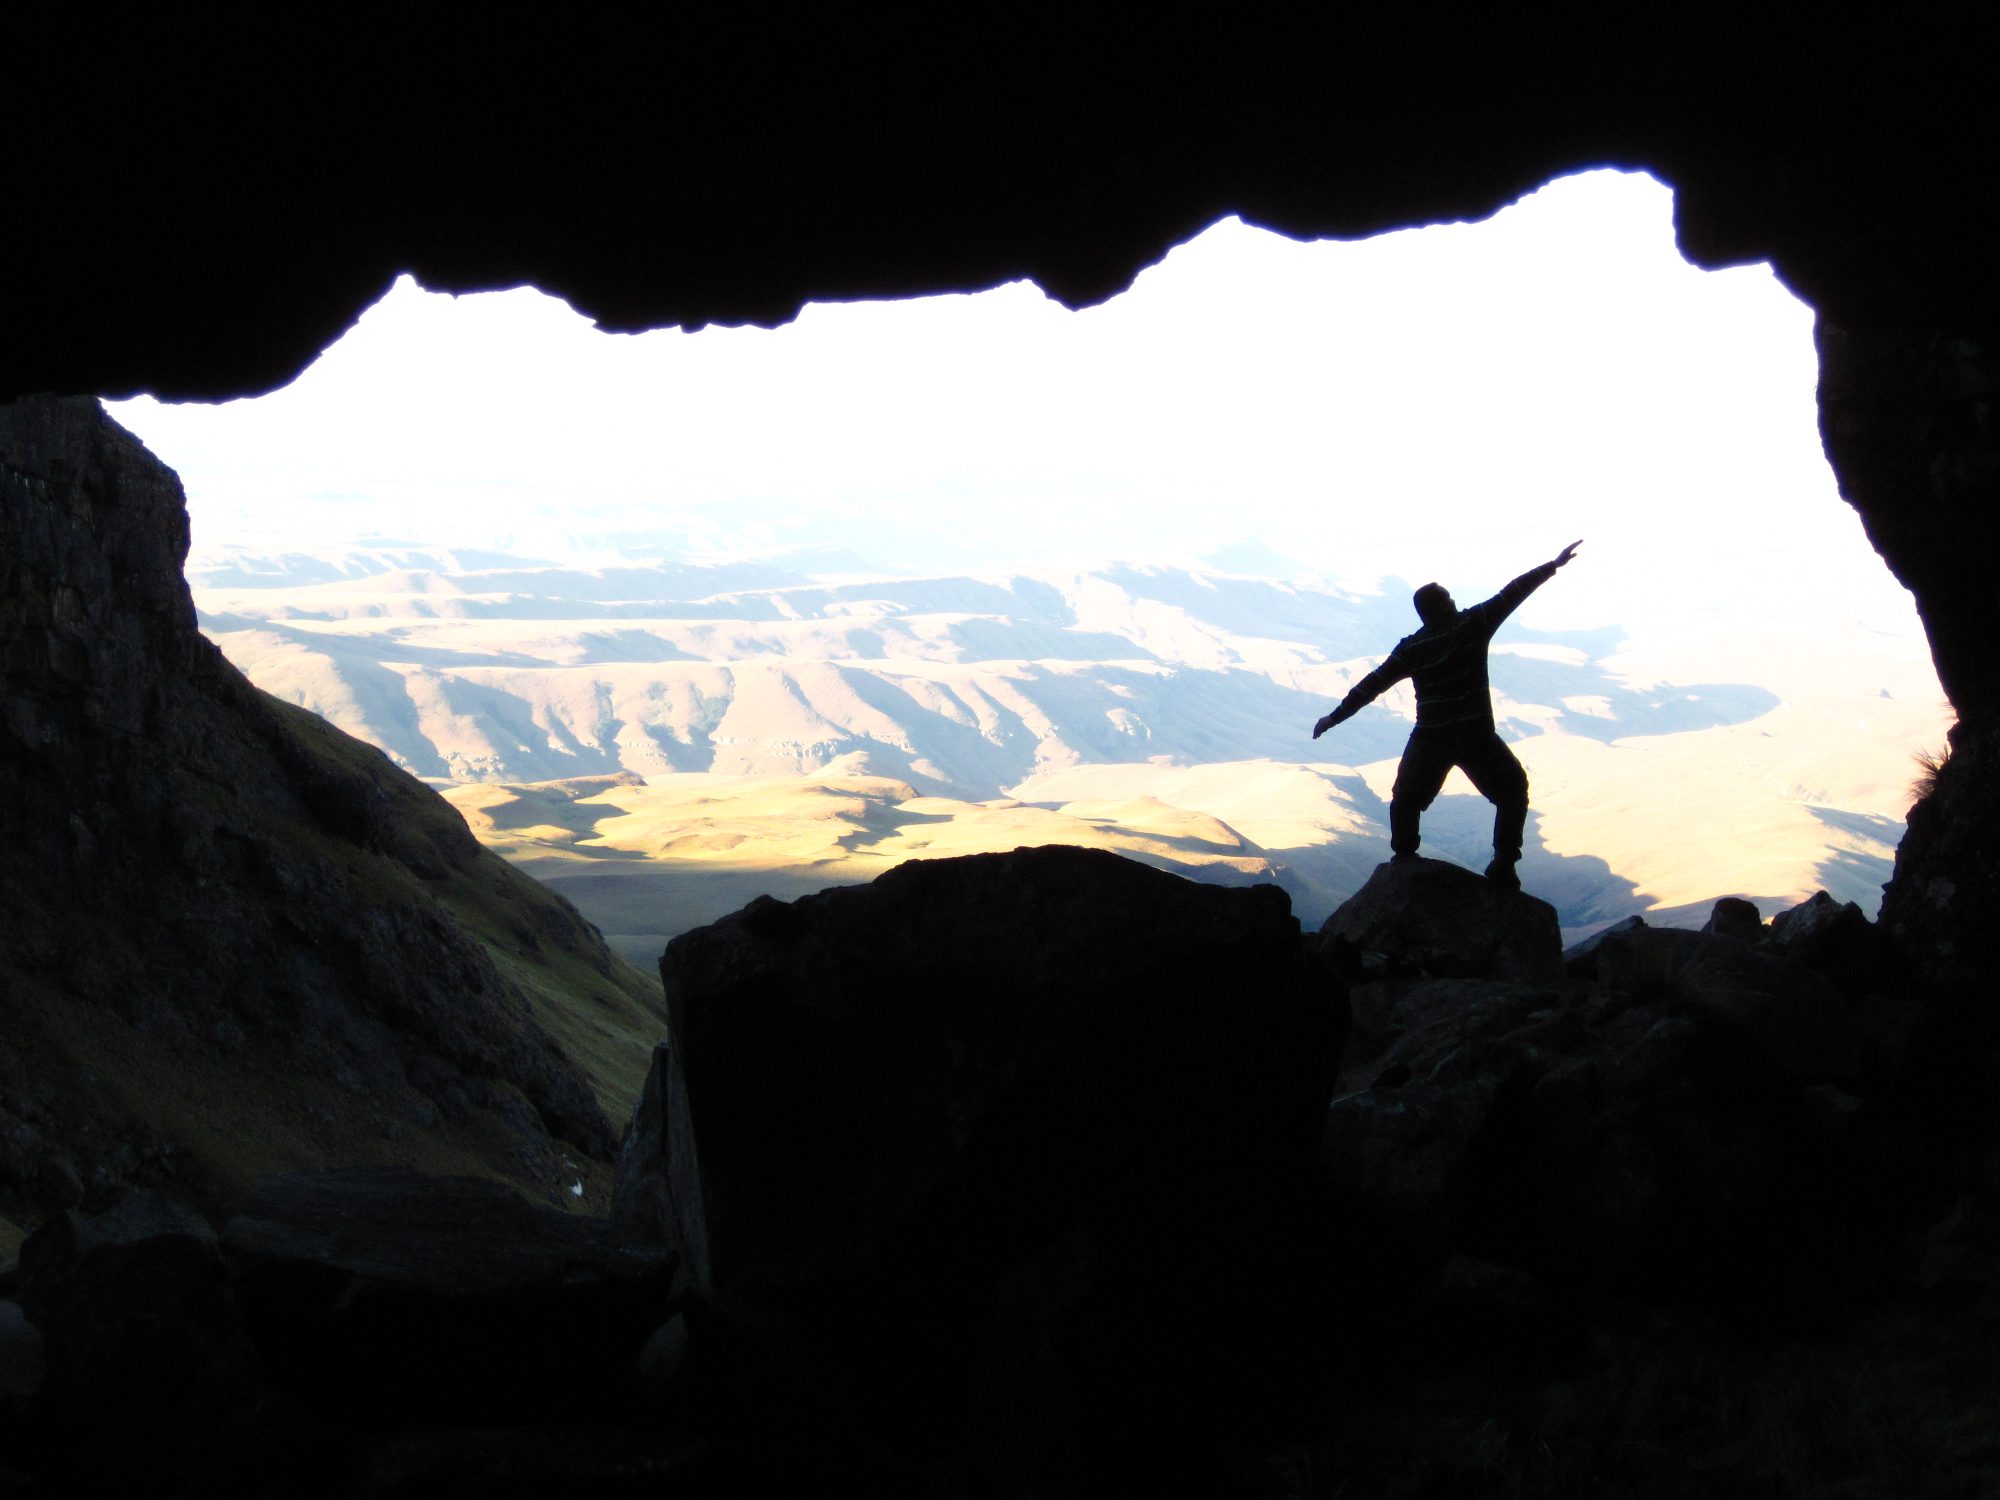 Berg Adventures, Drakensberg, KwaZulu-Natal